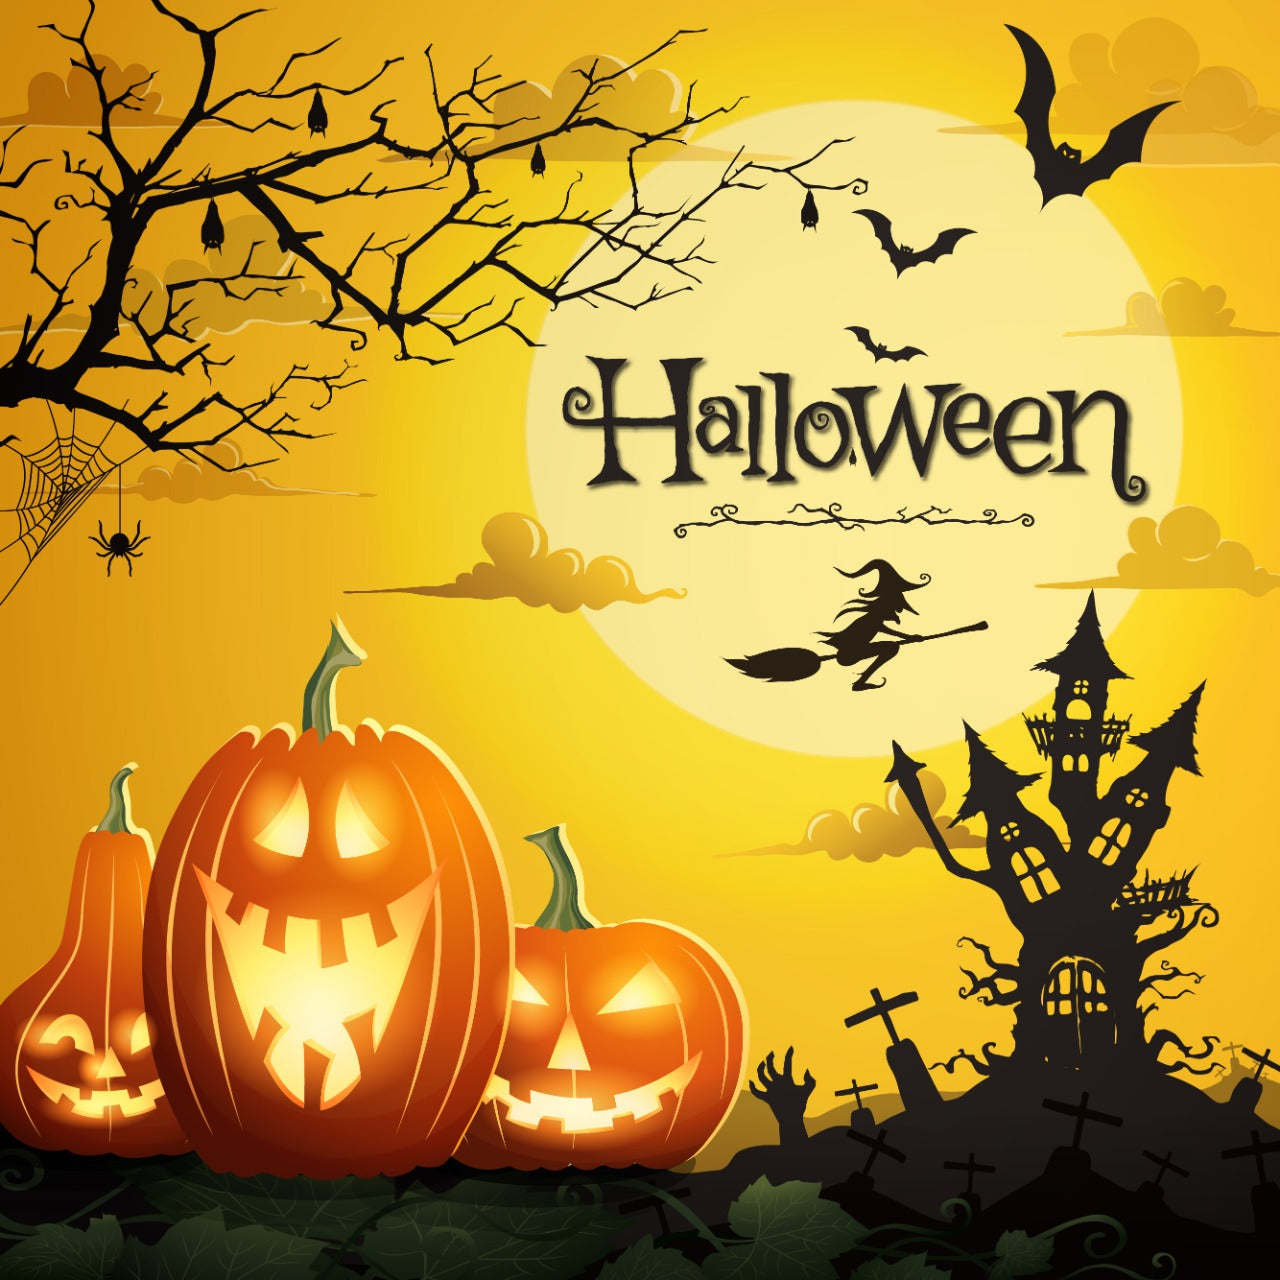 Halloween~ The Spooky Season